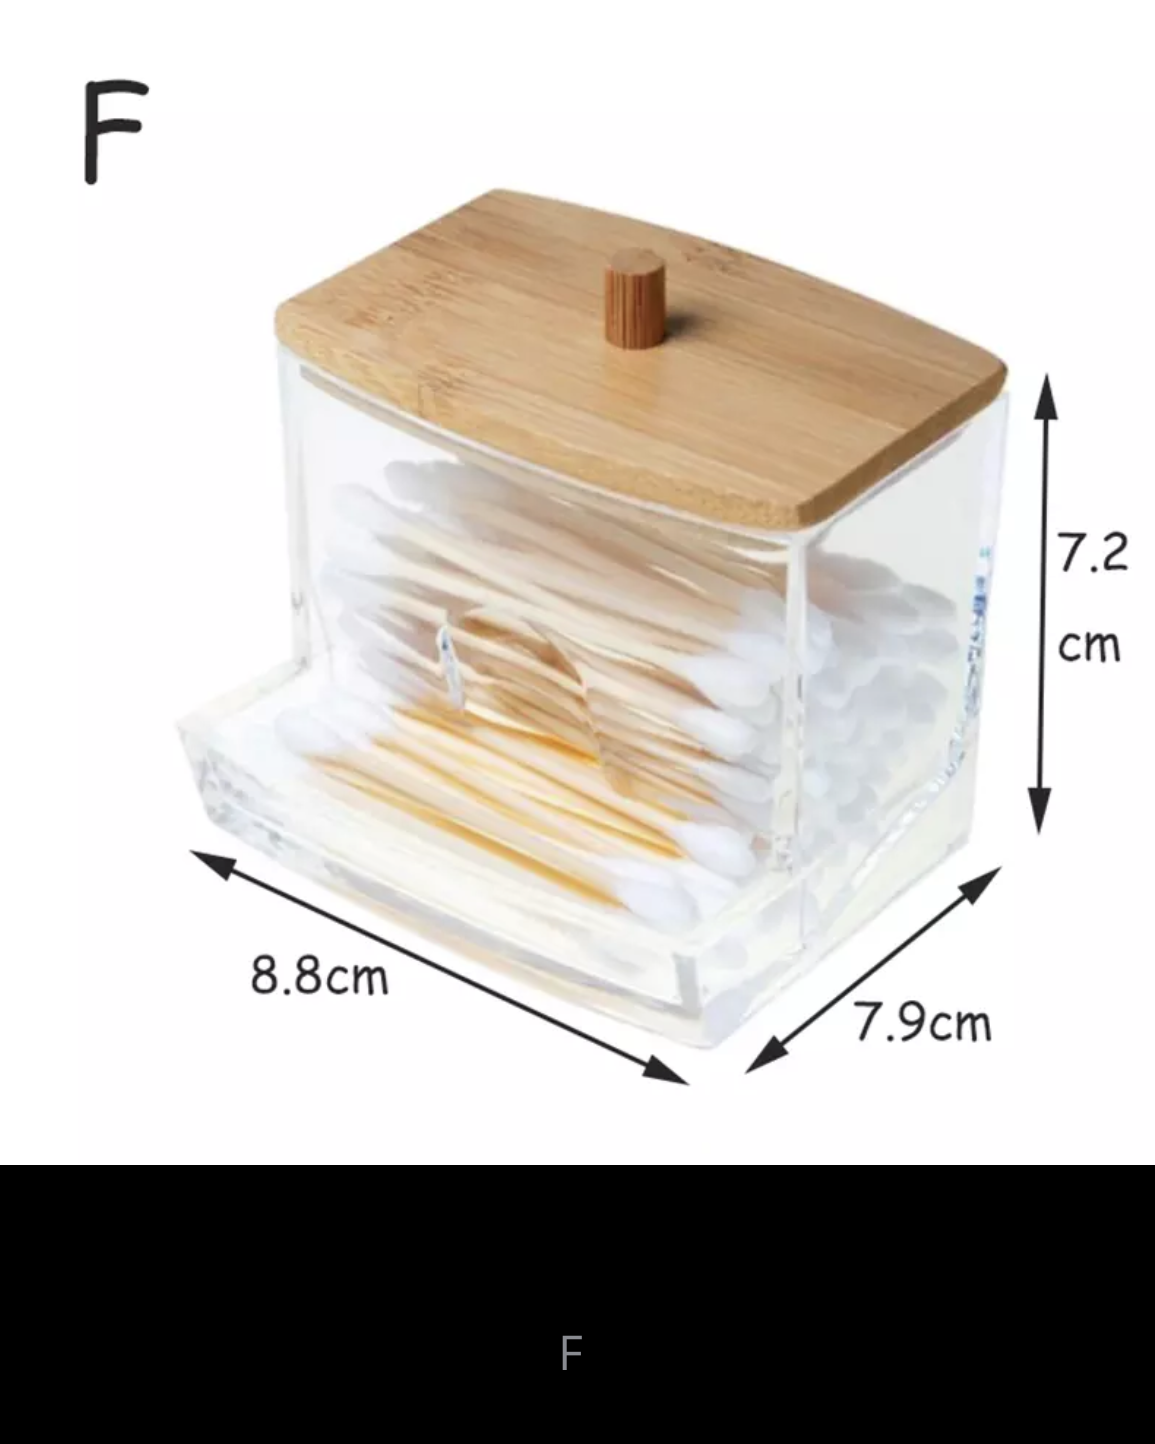 Quality Acrylic Storage Box Bathroom Jar Makeup Organizer Cotton Round Pad Holder Cotton Swab Box Qtip Holder Dispenser with Bamboo Lid